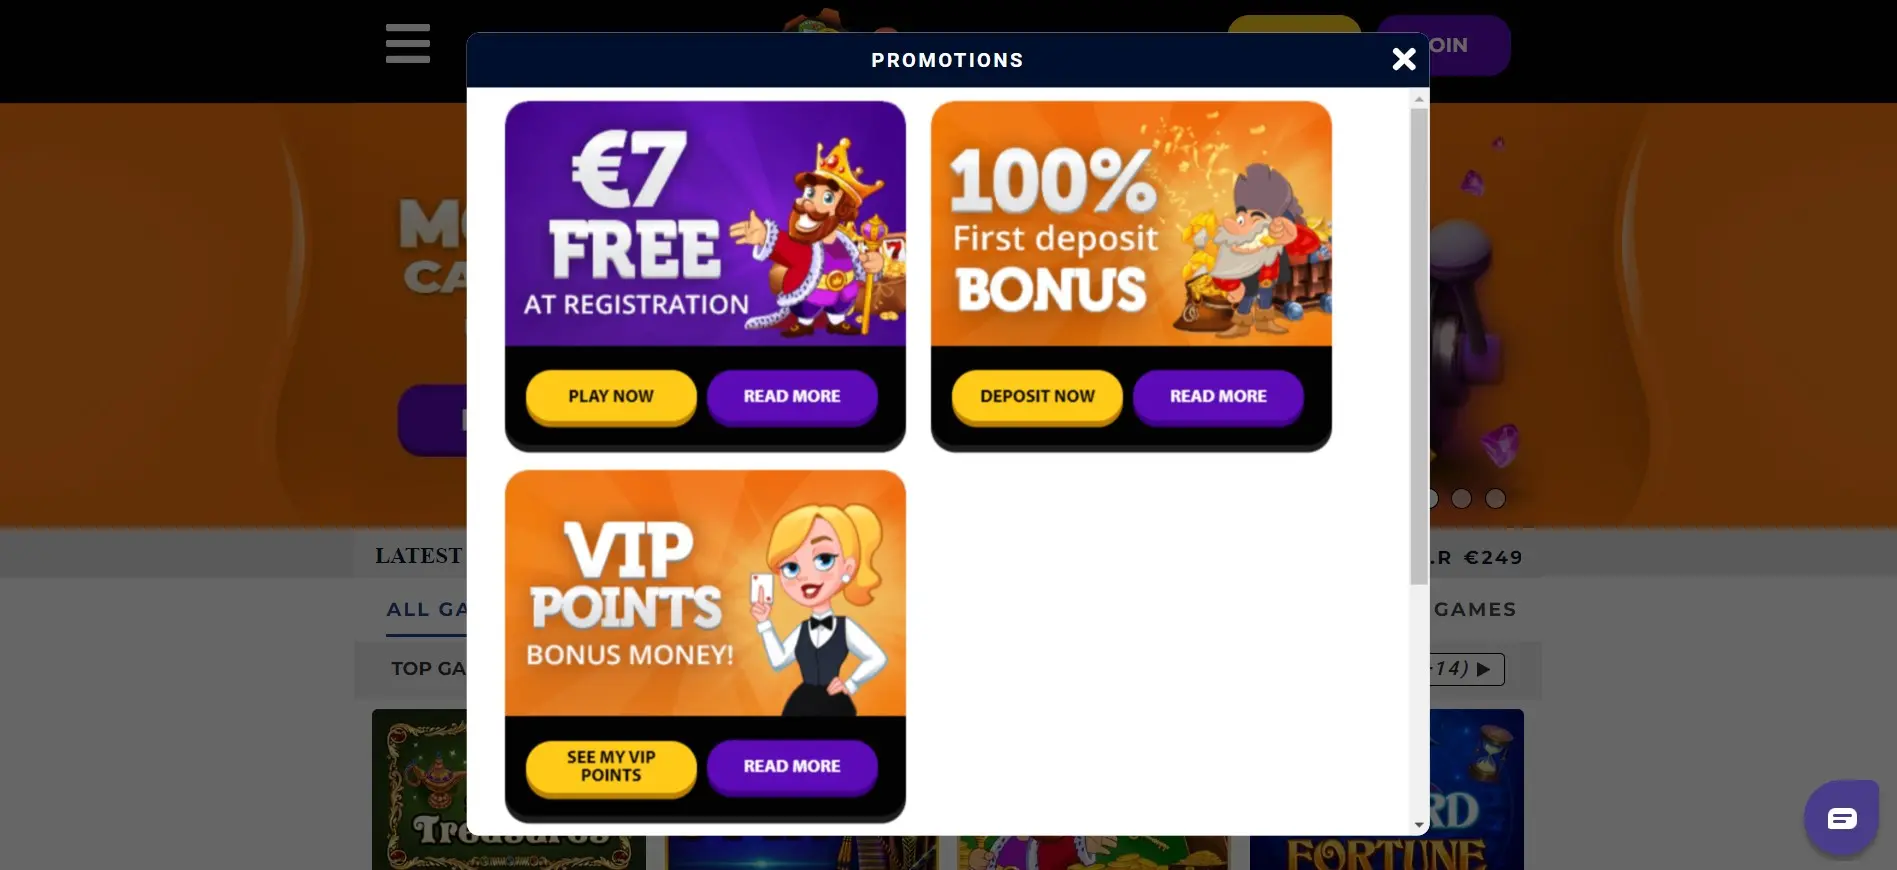 Gratorama casino bonuses and promotions